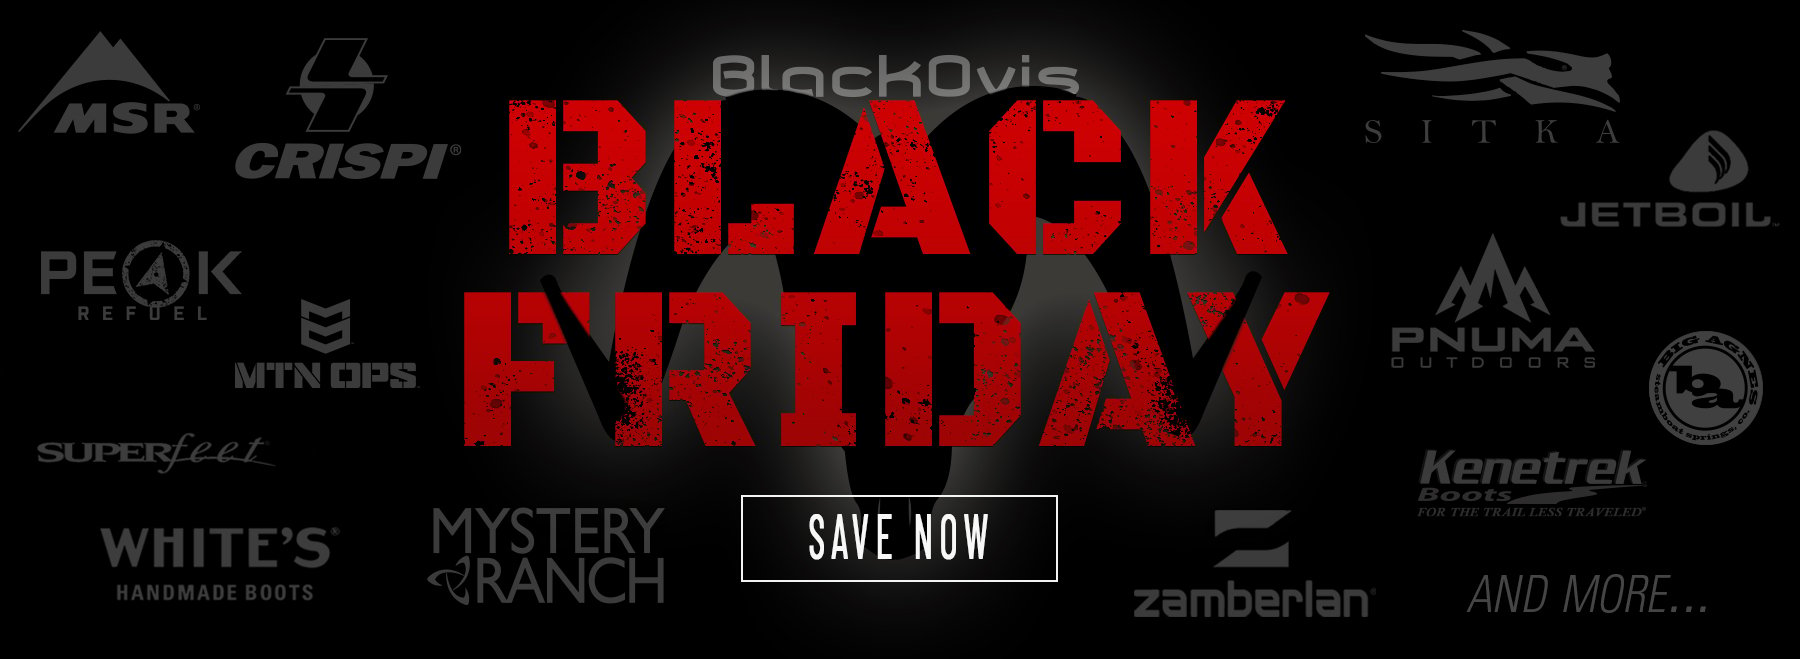 Shop BlackOvis's Black Friday Sale